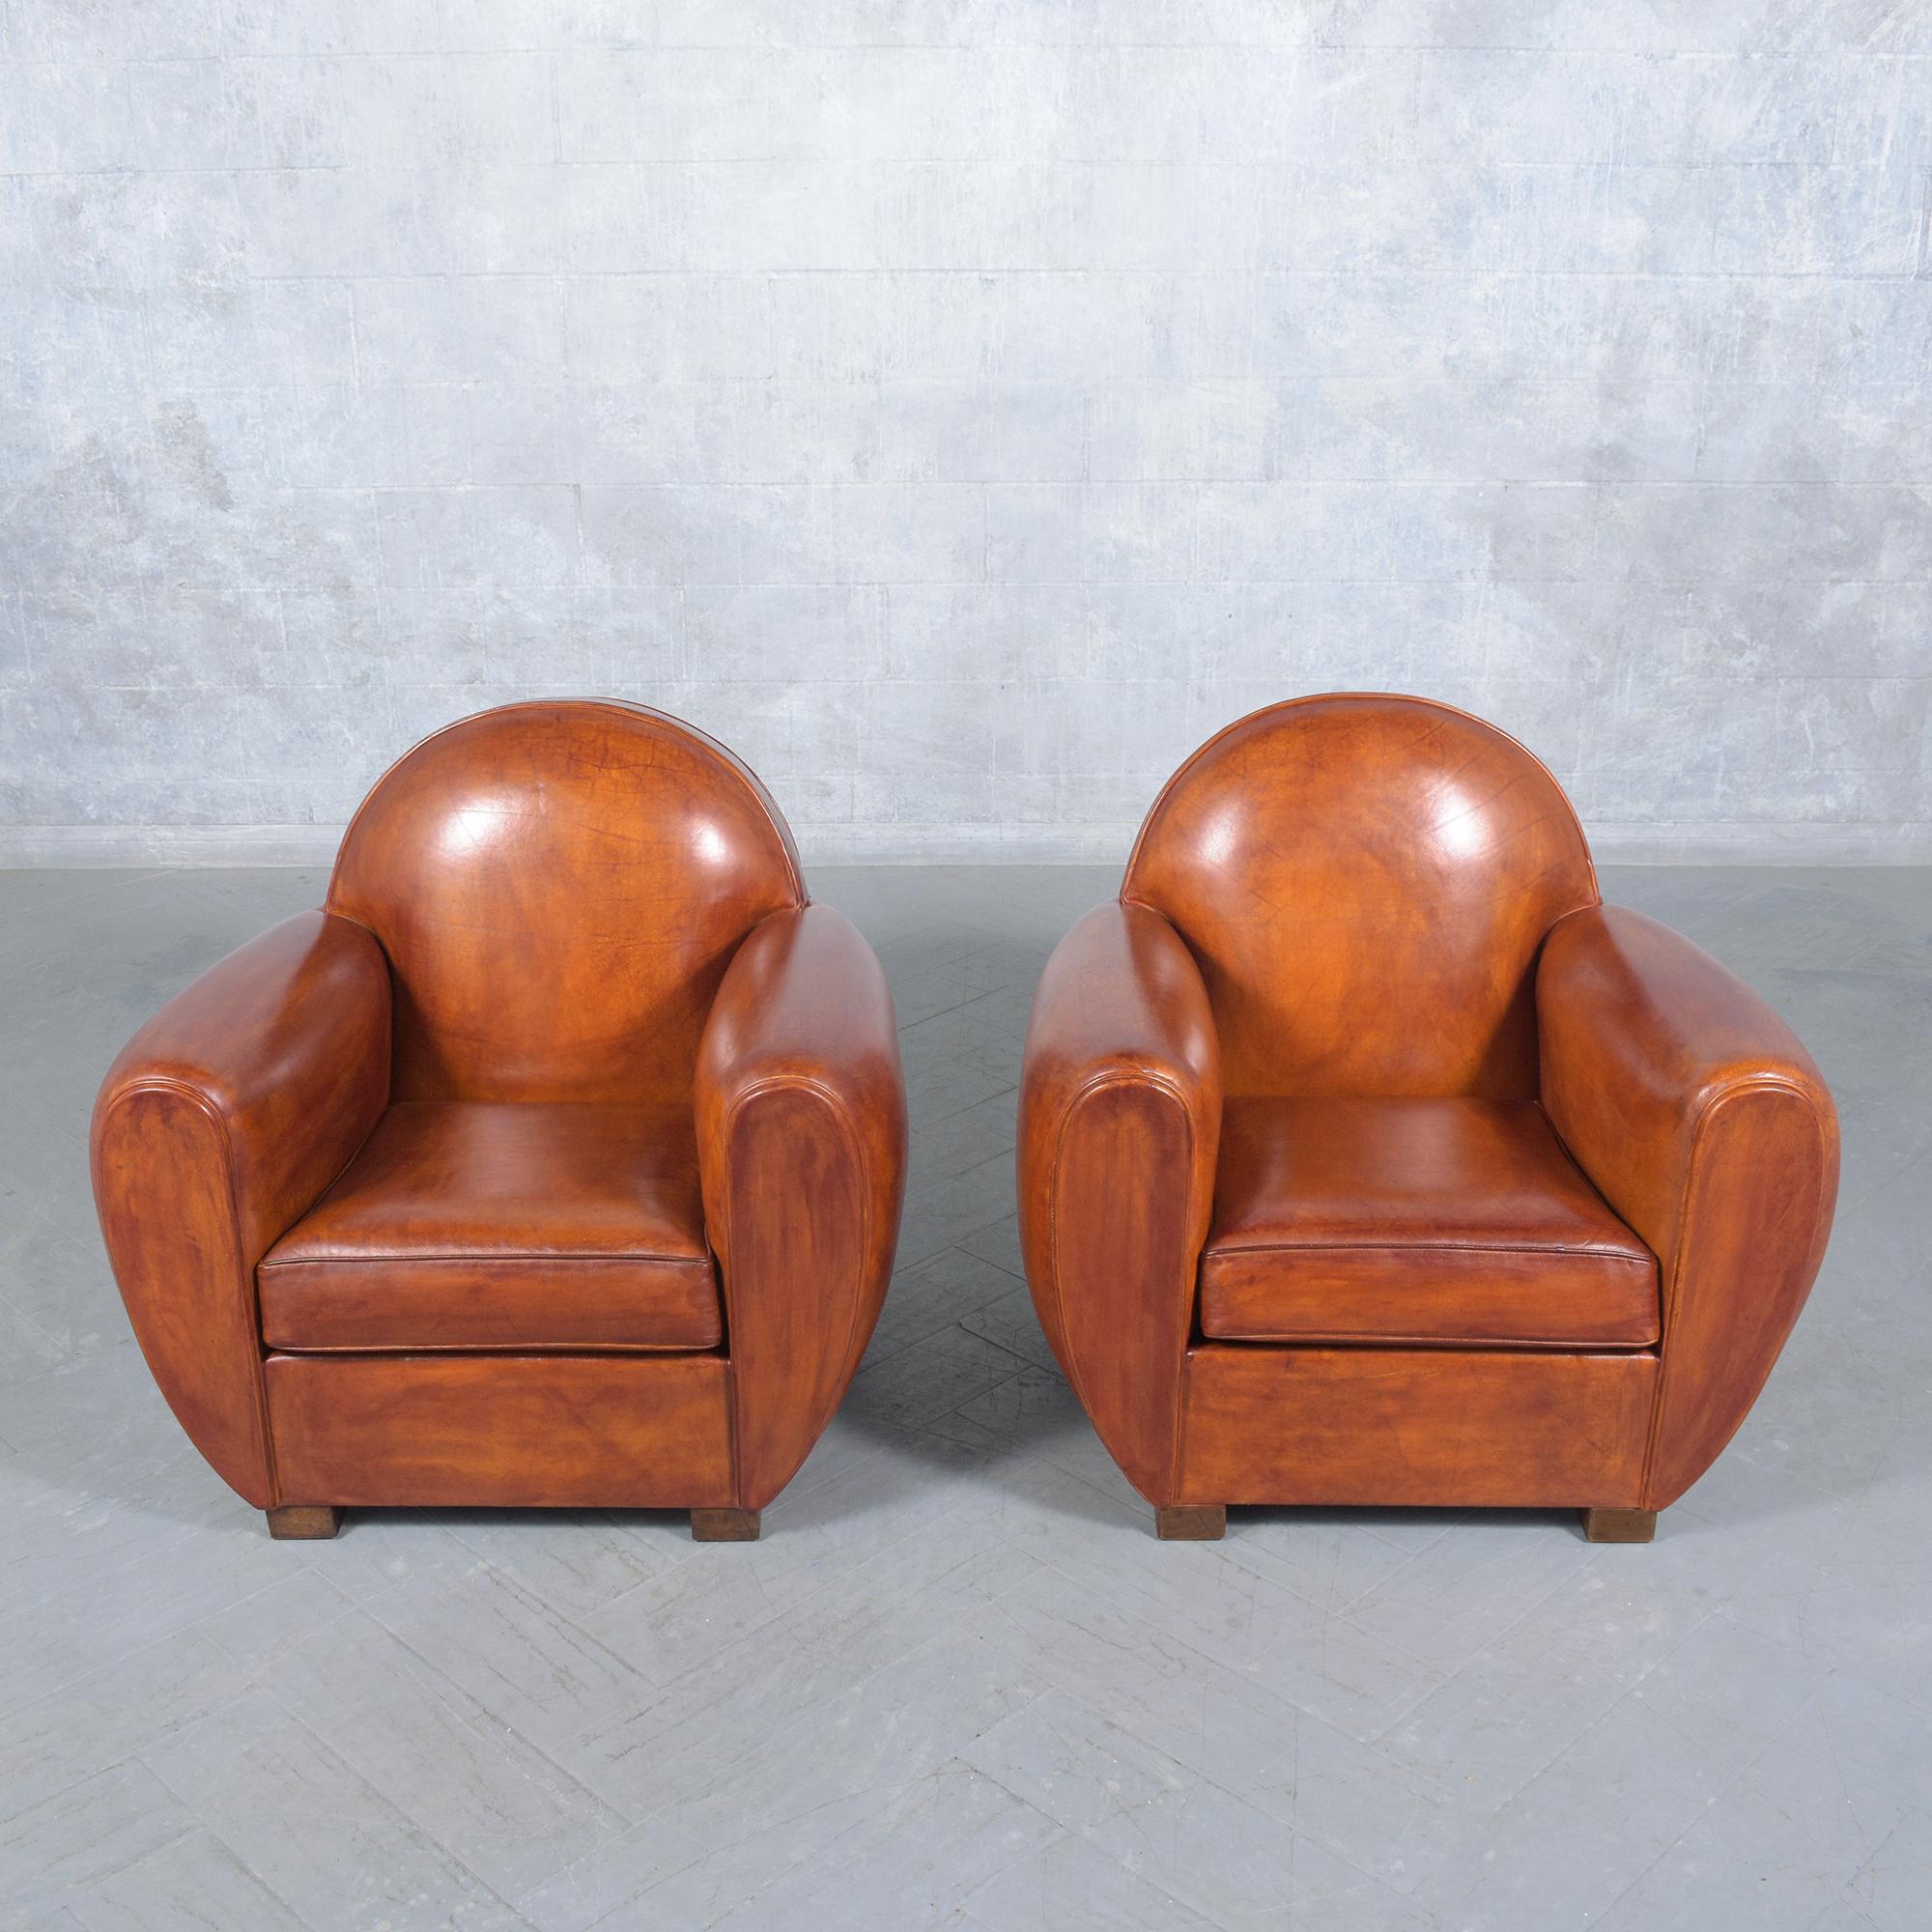 Restored Art Deco Club Chairs: 1960s French Deco Elegance 1